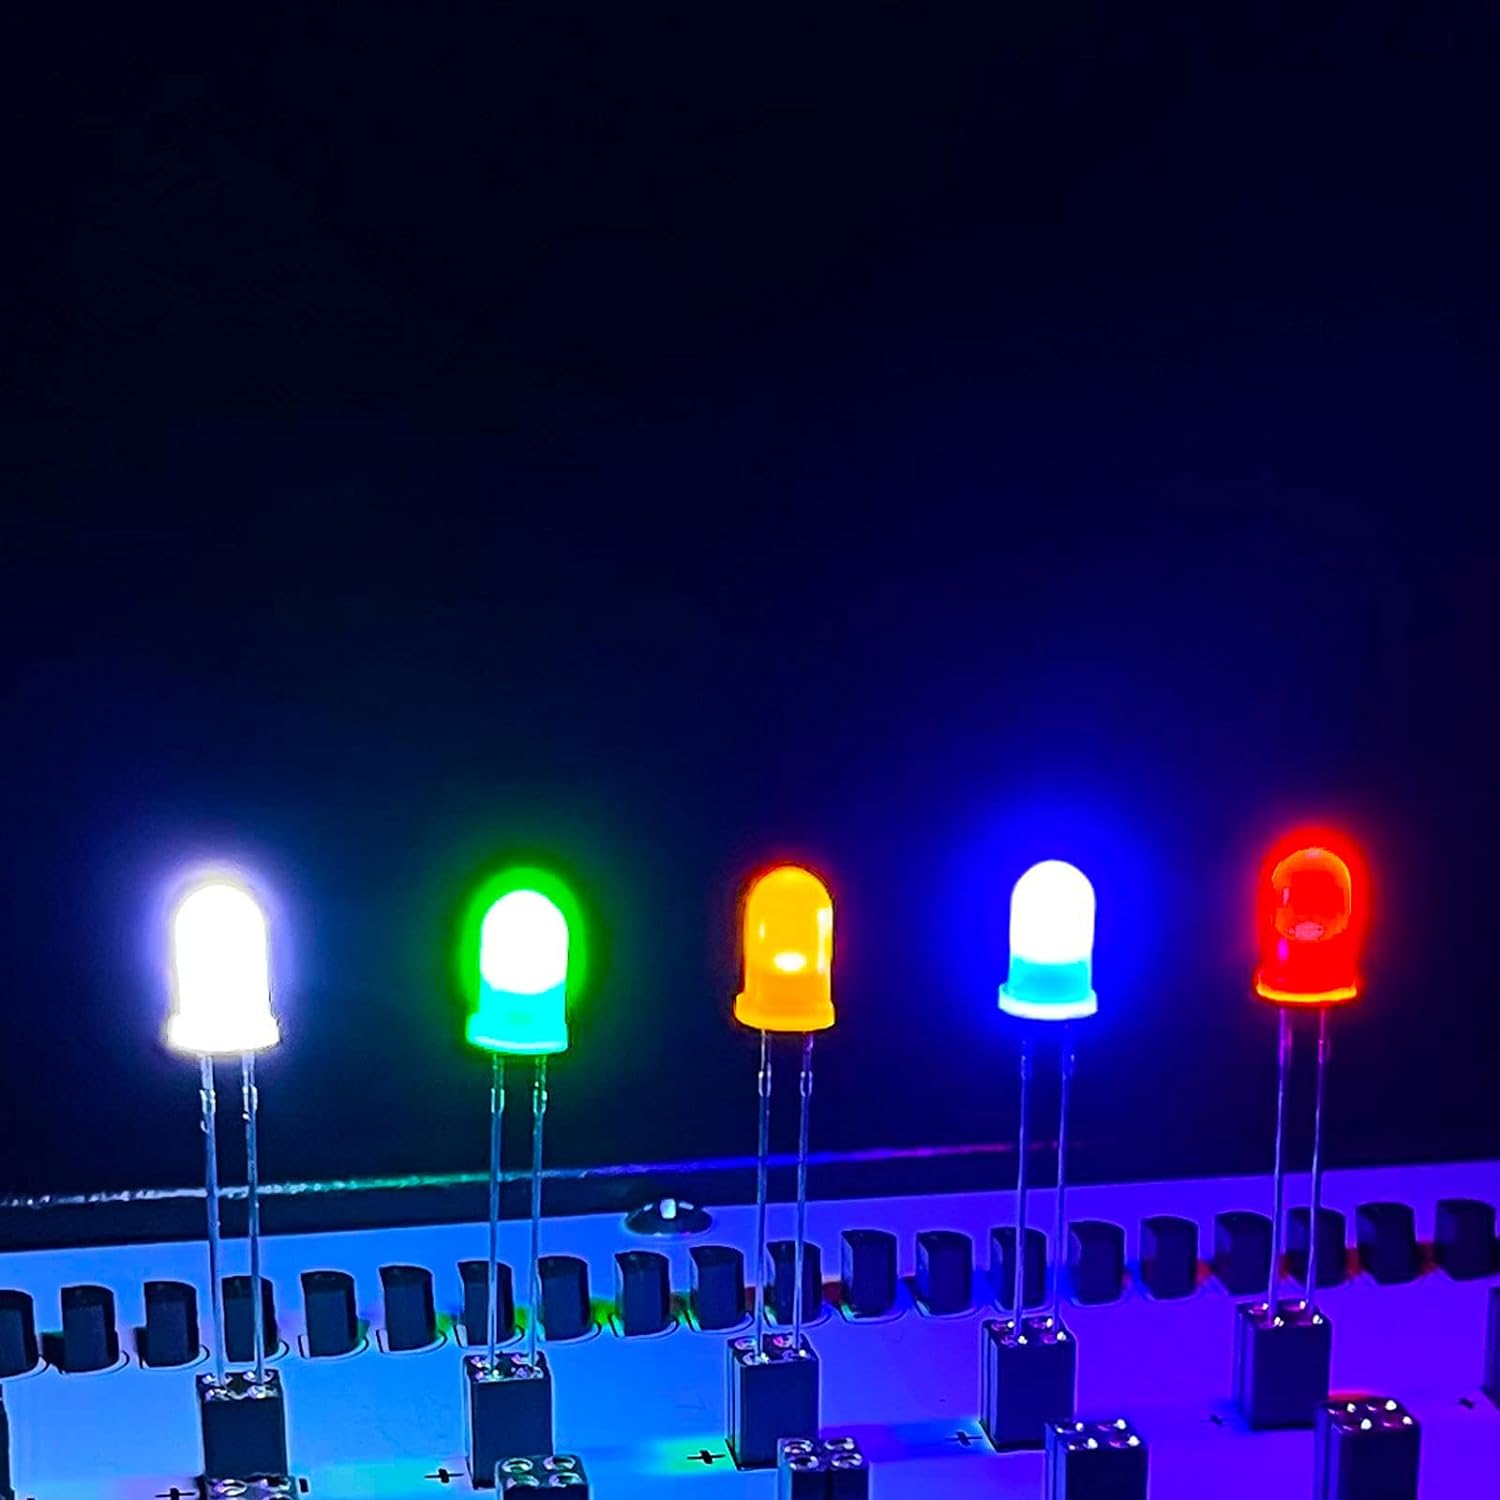 100 Pcs 5mm LED Light Emitting Diodes Bulb LED Lamp- Clear and Transparent DC 2V 20mA DIY Science Project Electronics Components Lighting Kit (5*Color*20pcs)